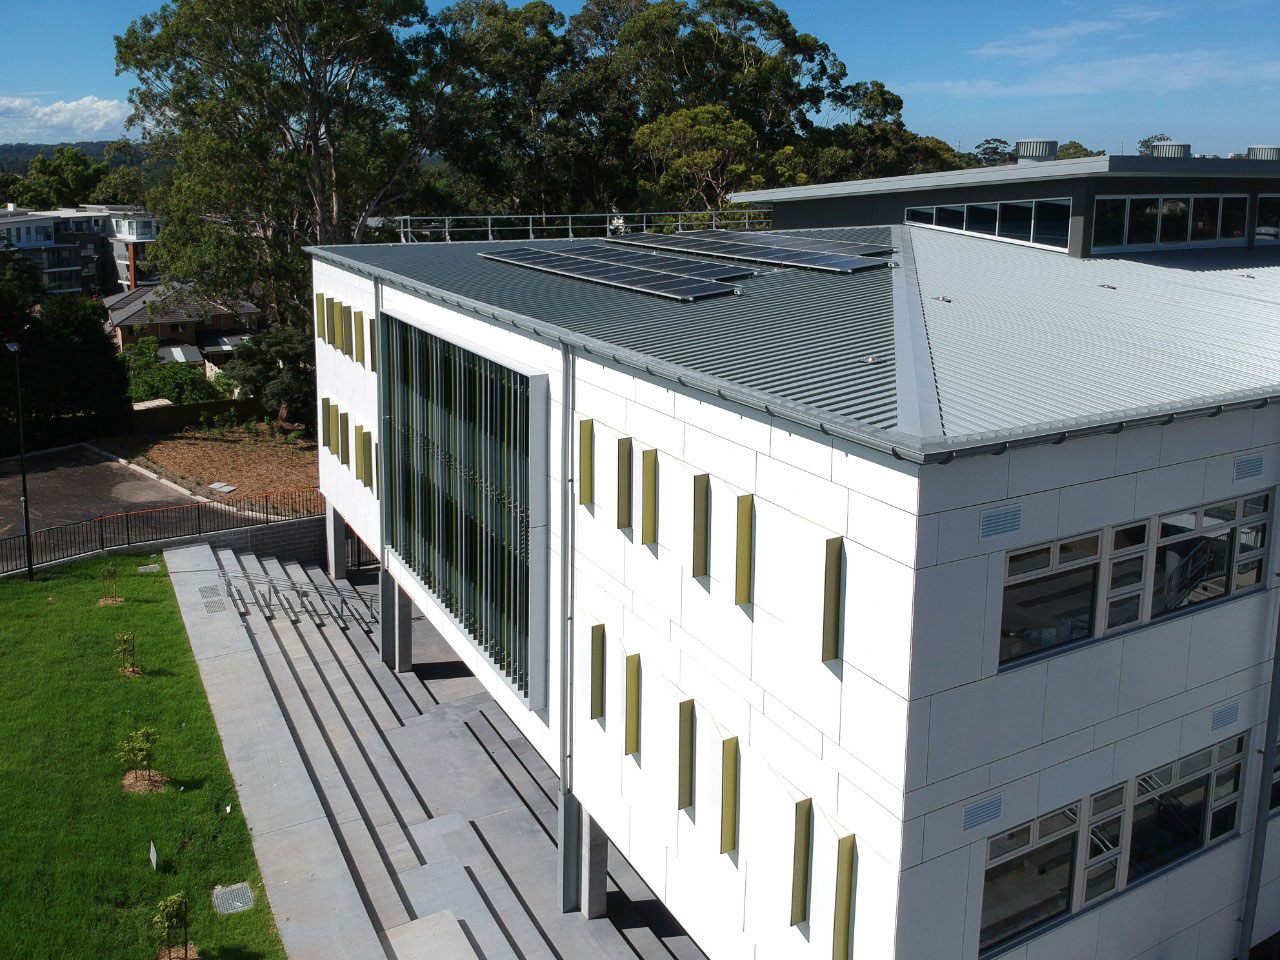 Carlingford Public School, Australia, NBRS Architecture, Grindley, Photography Carlingford Public School, NSW